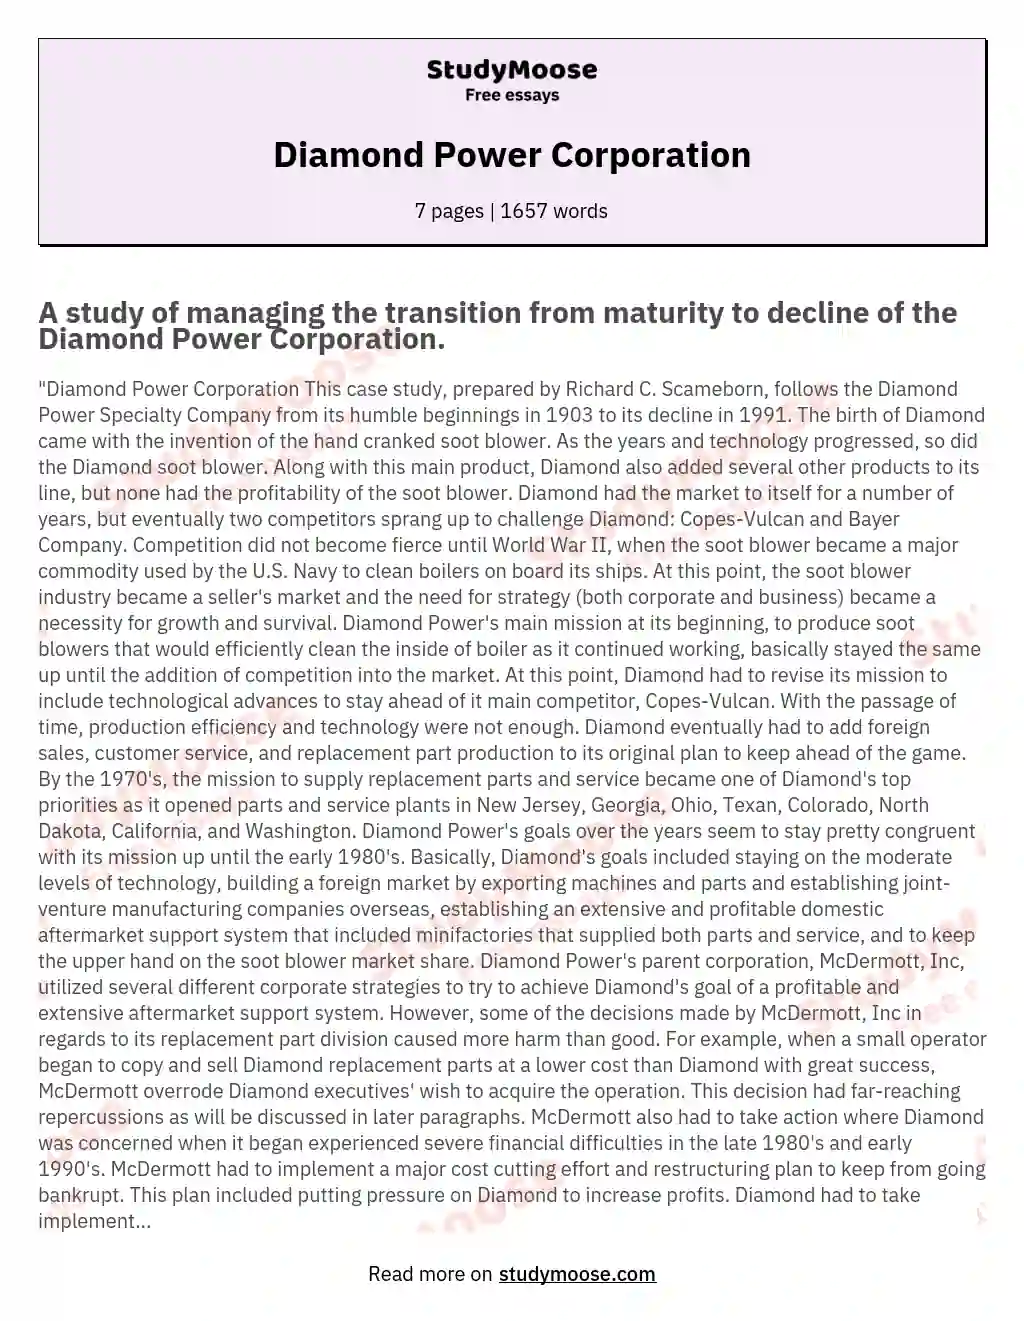 Diamond Power Corporation essay